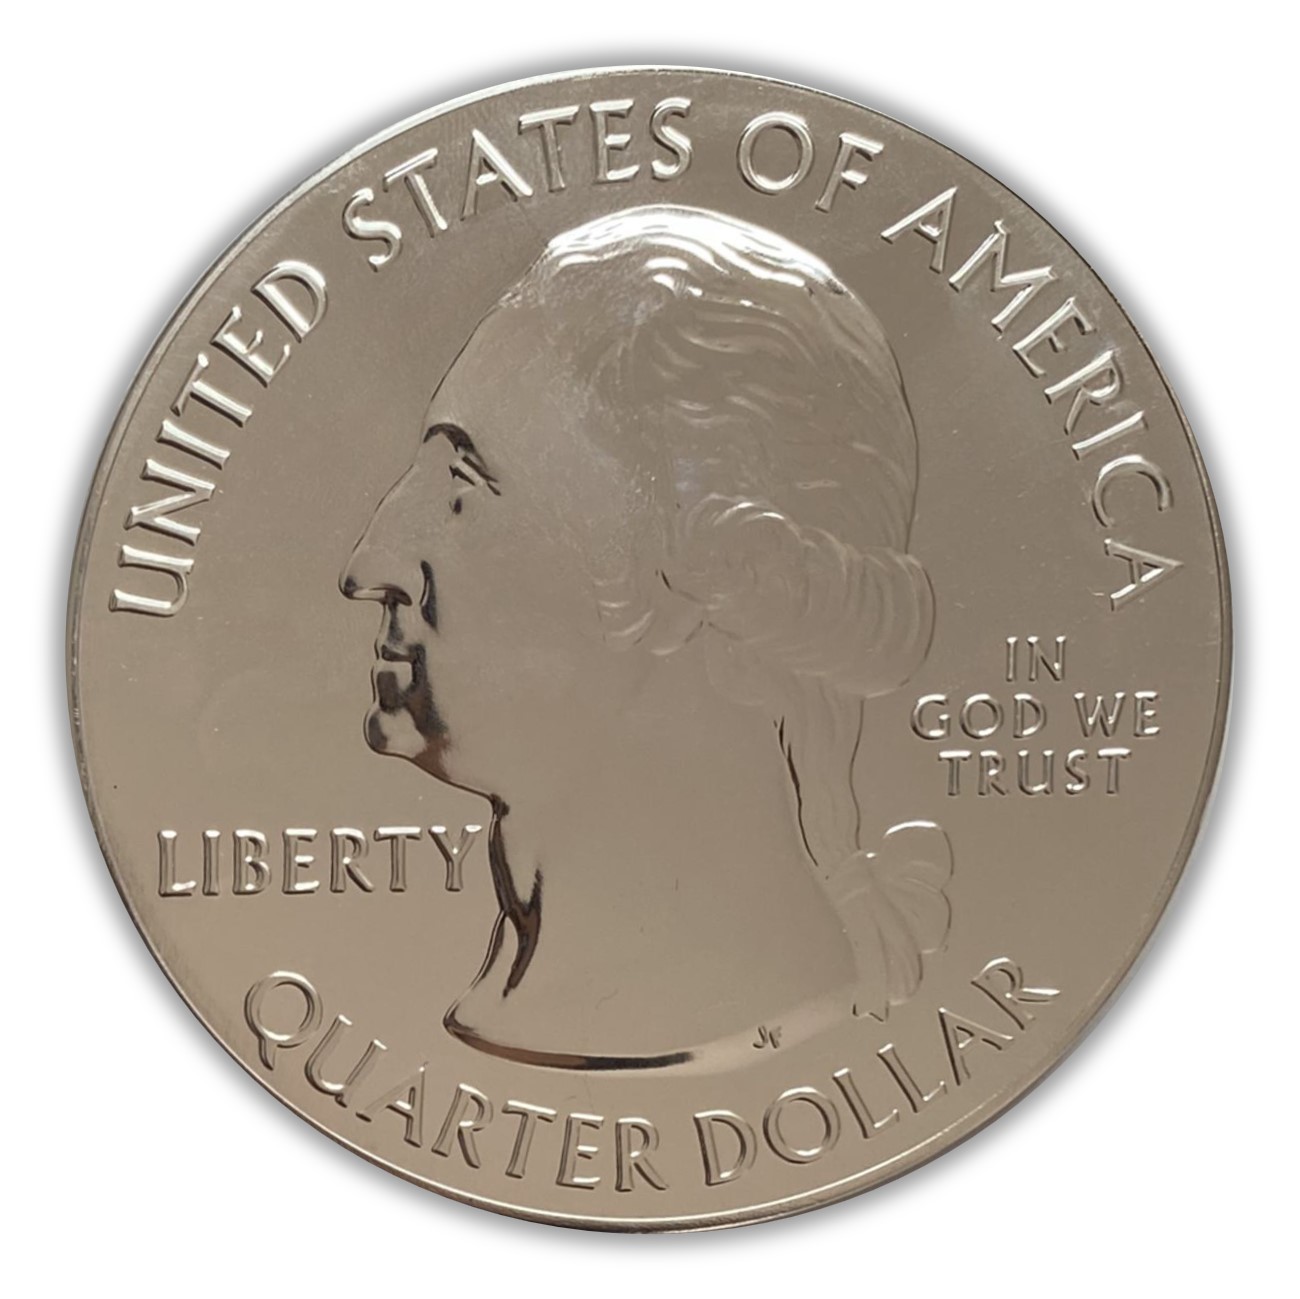 2020 America the Beautiful Salt River Bay 5 oz Silver Coin